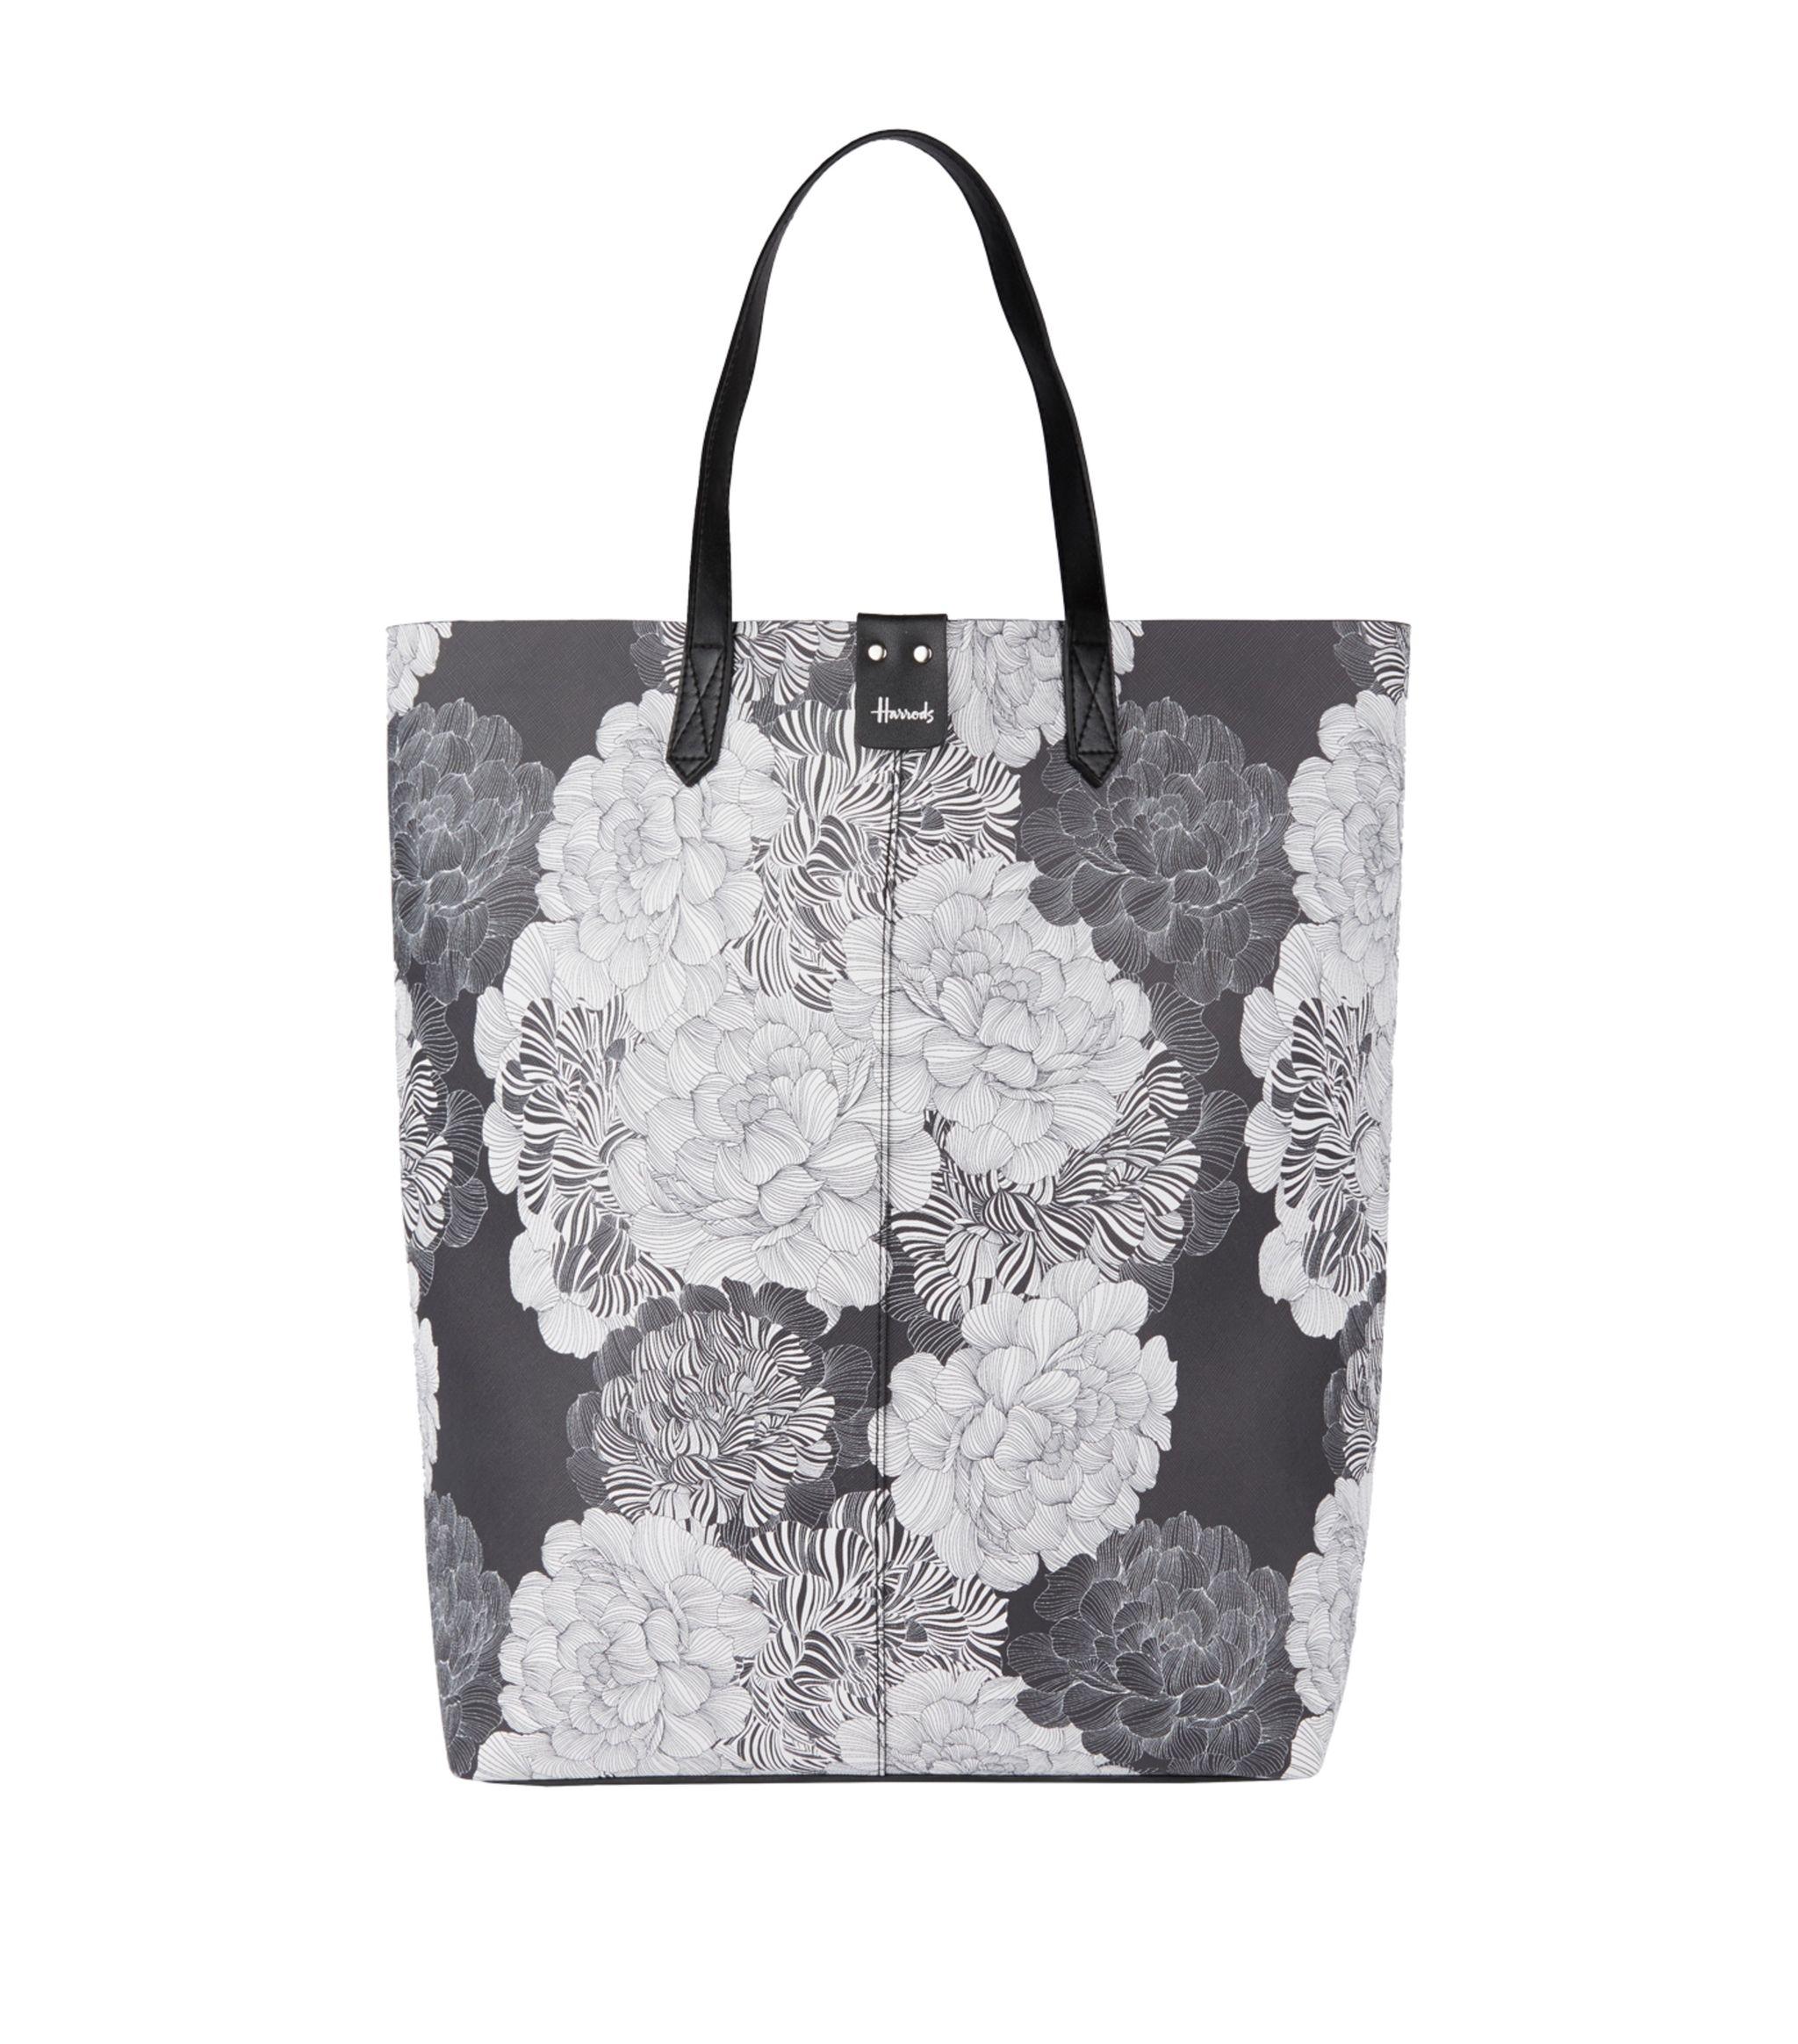 Harrods Leather Medium Floral Tote Bag - Save 51% - Lyst